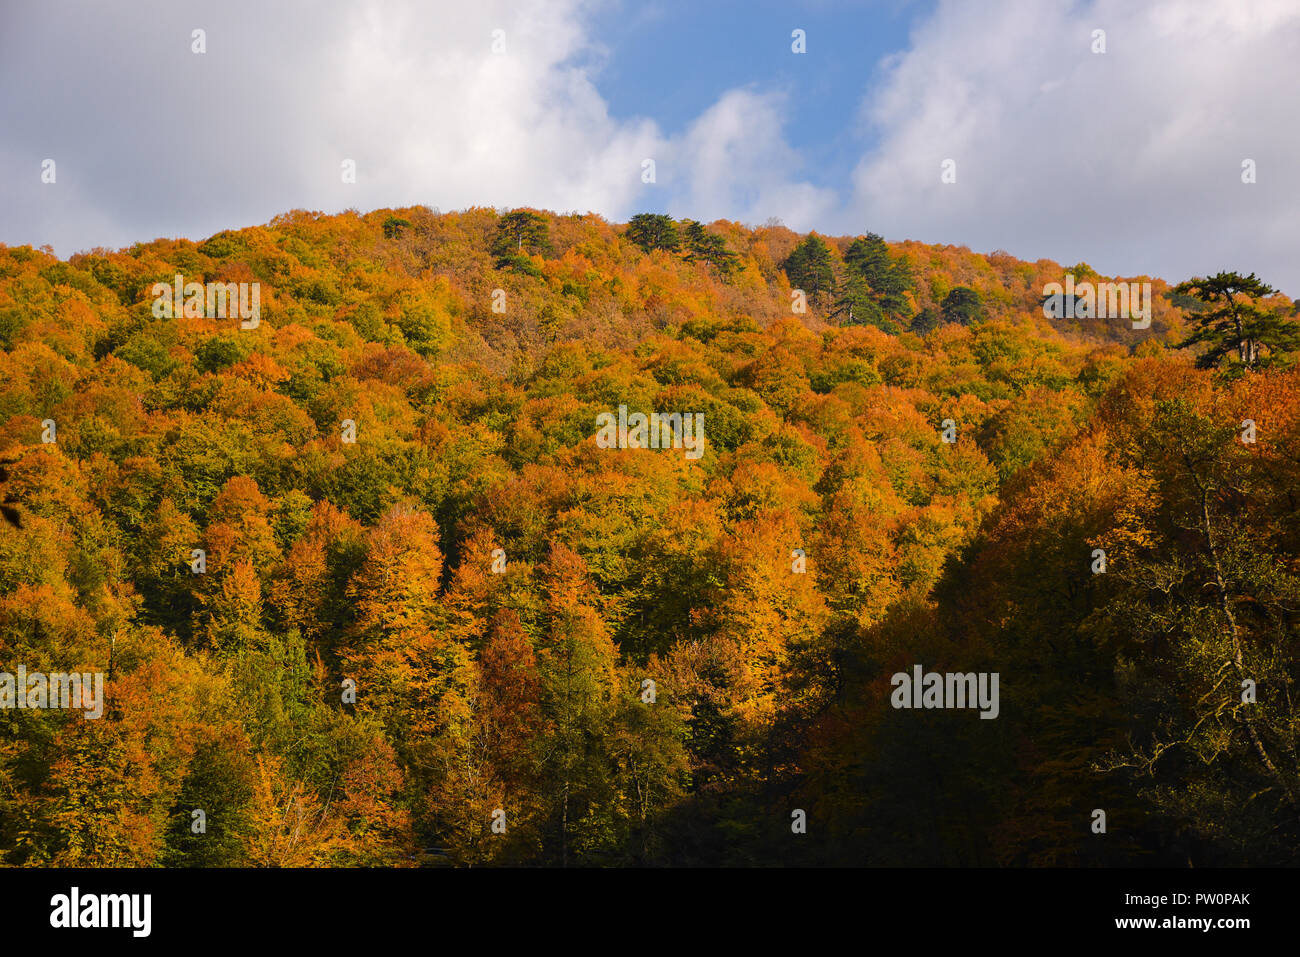 Fall trees at The Yedigoller National Park, Turkey Stock Photo